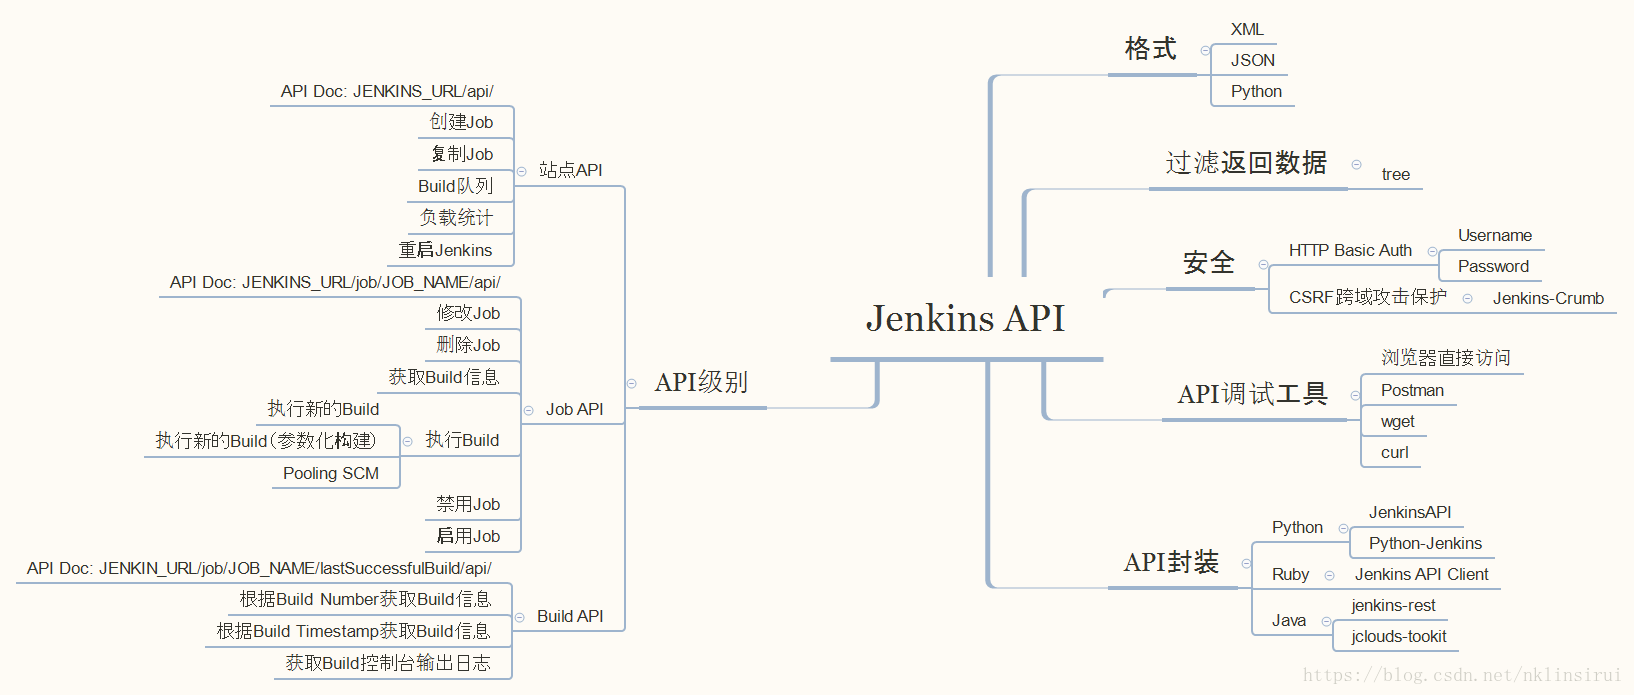 Jenkins API 学习路线图